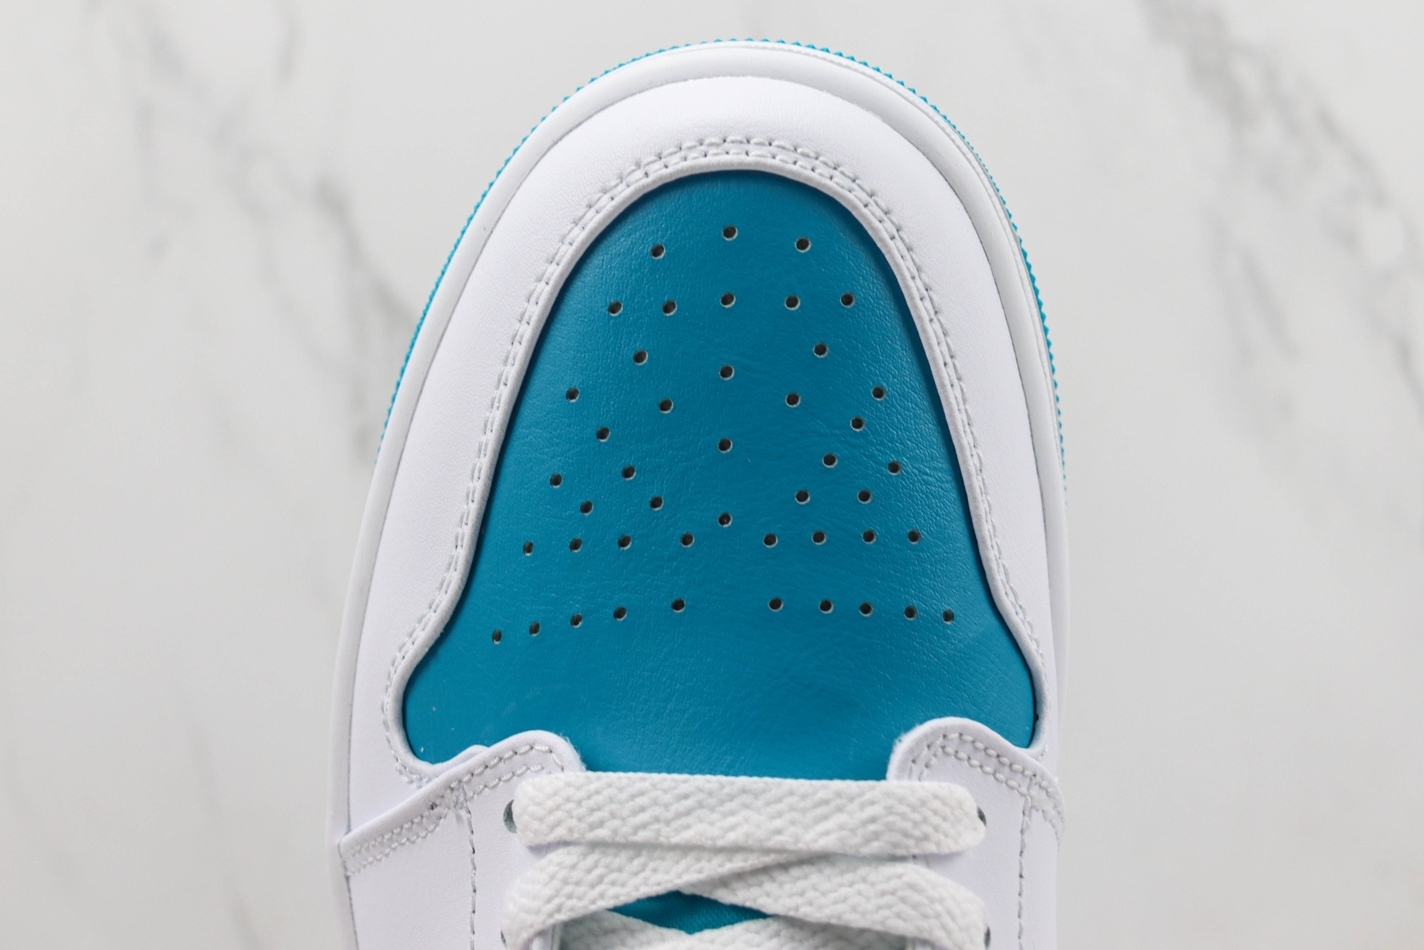 Air Jordan 1 Low 'Aquatone' Sneakers - Classic Style with Fresh Aquatic Vibes